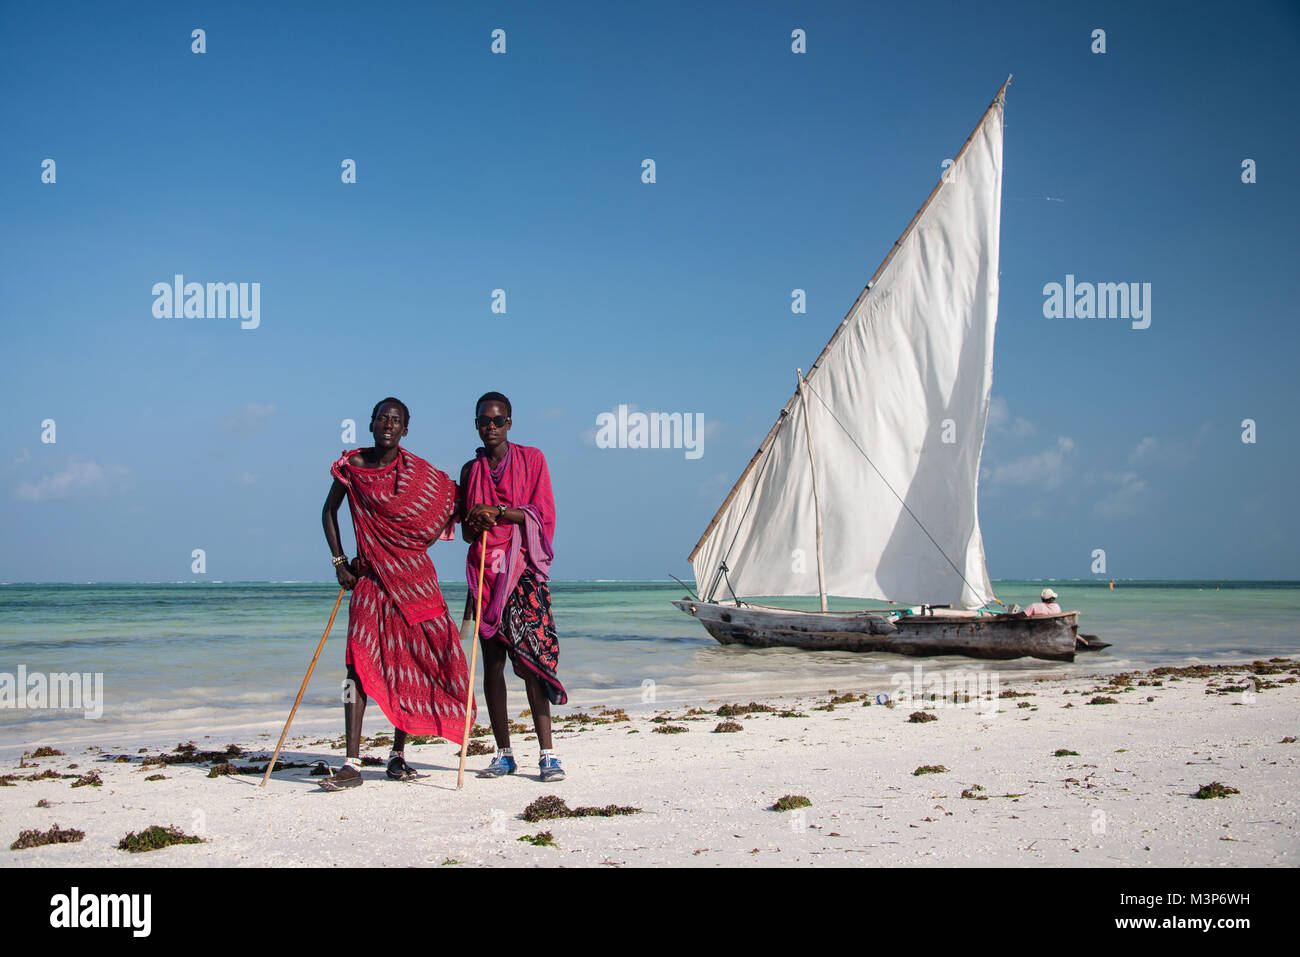 KIWENGWA, ZANZIBAR - DEC 27, 2017: Portrait of masai men in traditional clothes posing on the beach, Kiwengwa, Zanzibar Stock Photo